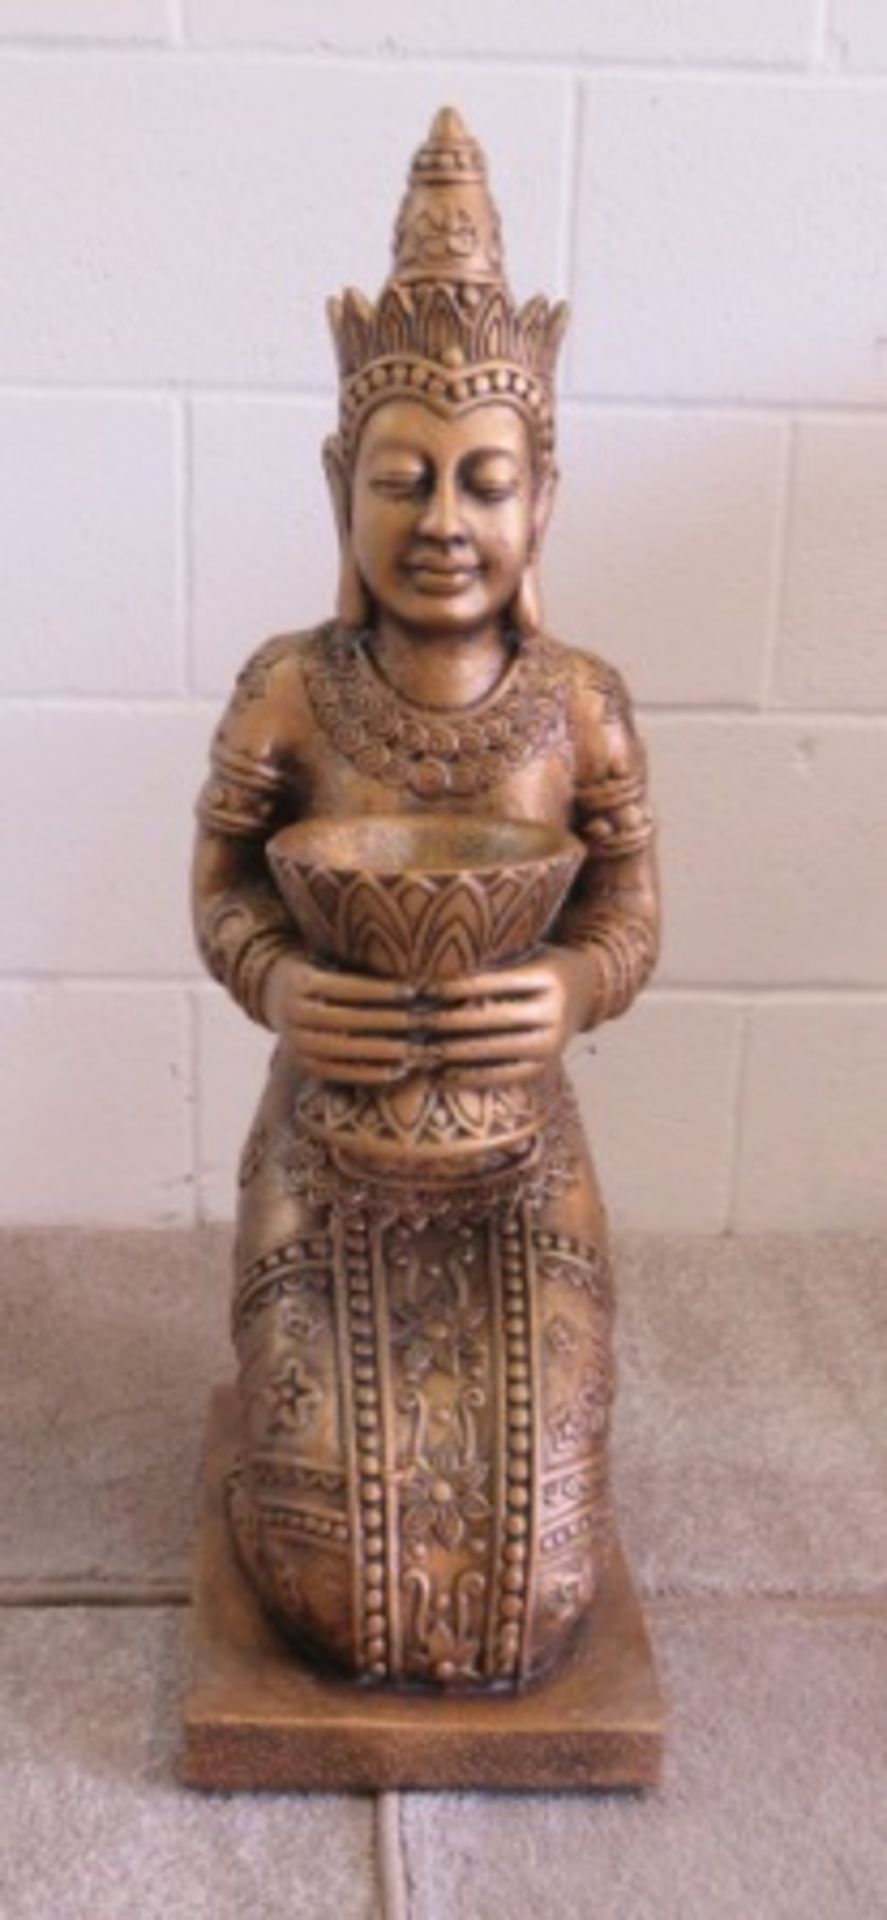 Oriental Priestess Statuette - 3 Feet Tall - Image 3 of 4